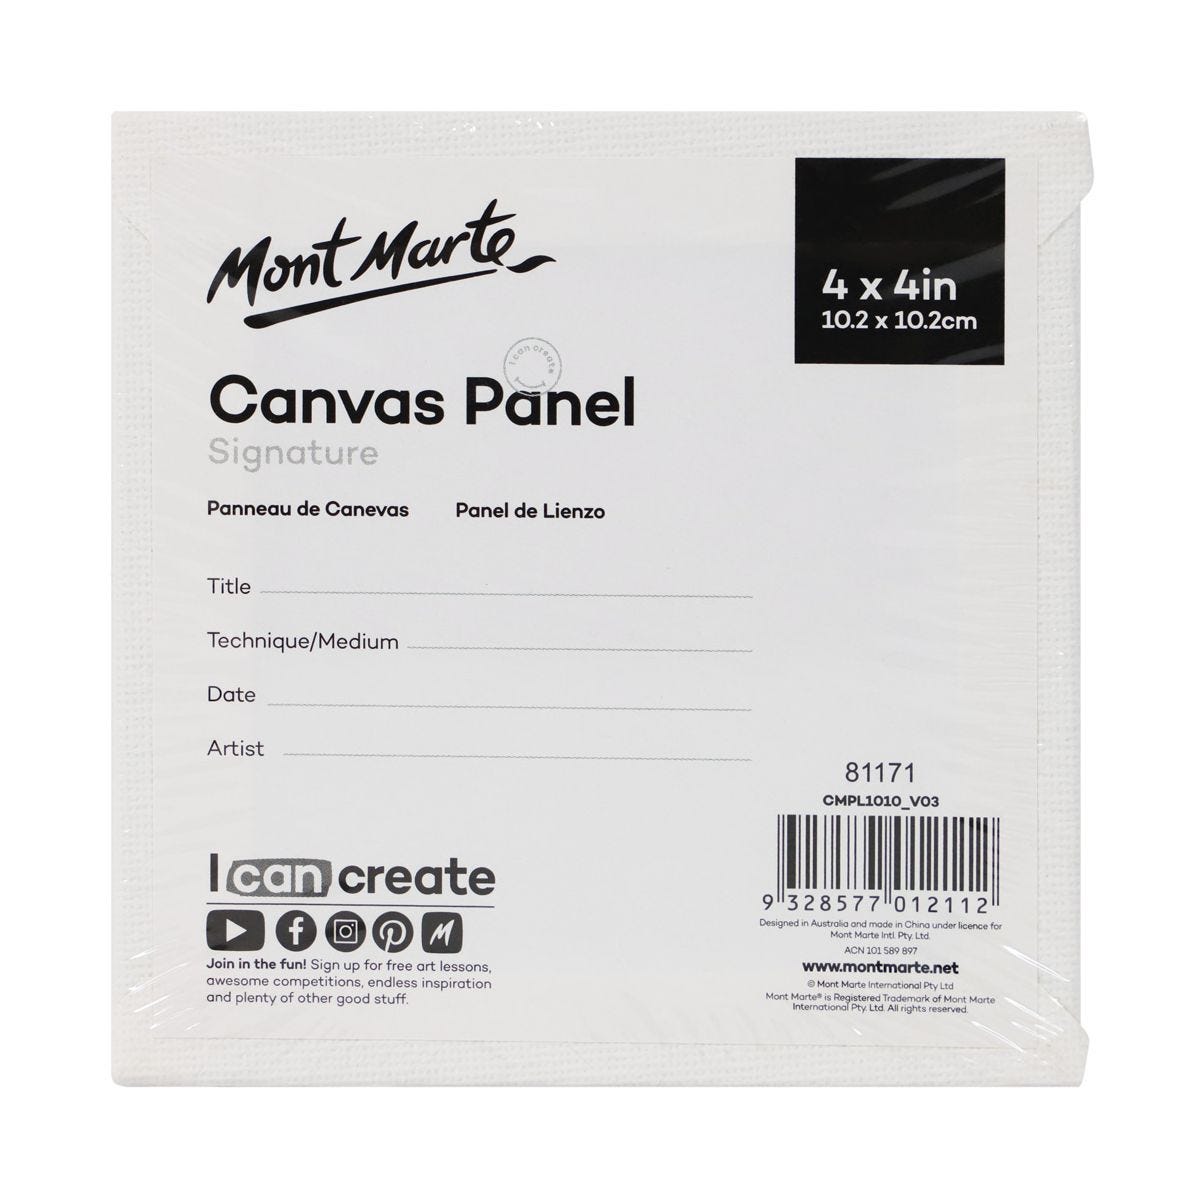 Bộ 5 Tấm Canvas Panel (Toan) hiệu Mont Marte Dùng Để Vẽ Màu Acrylic 10.2x10.2cm - Canvas Panels Signature Pack 5 10.2 x 10.2cm (4 x 4in)